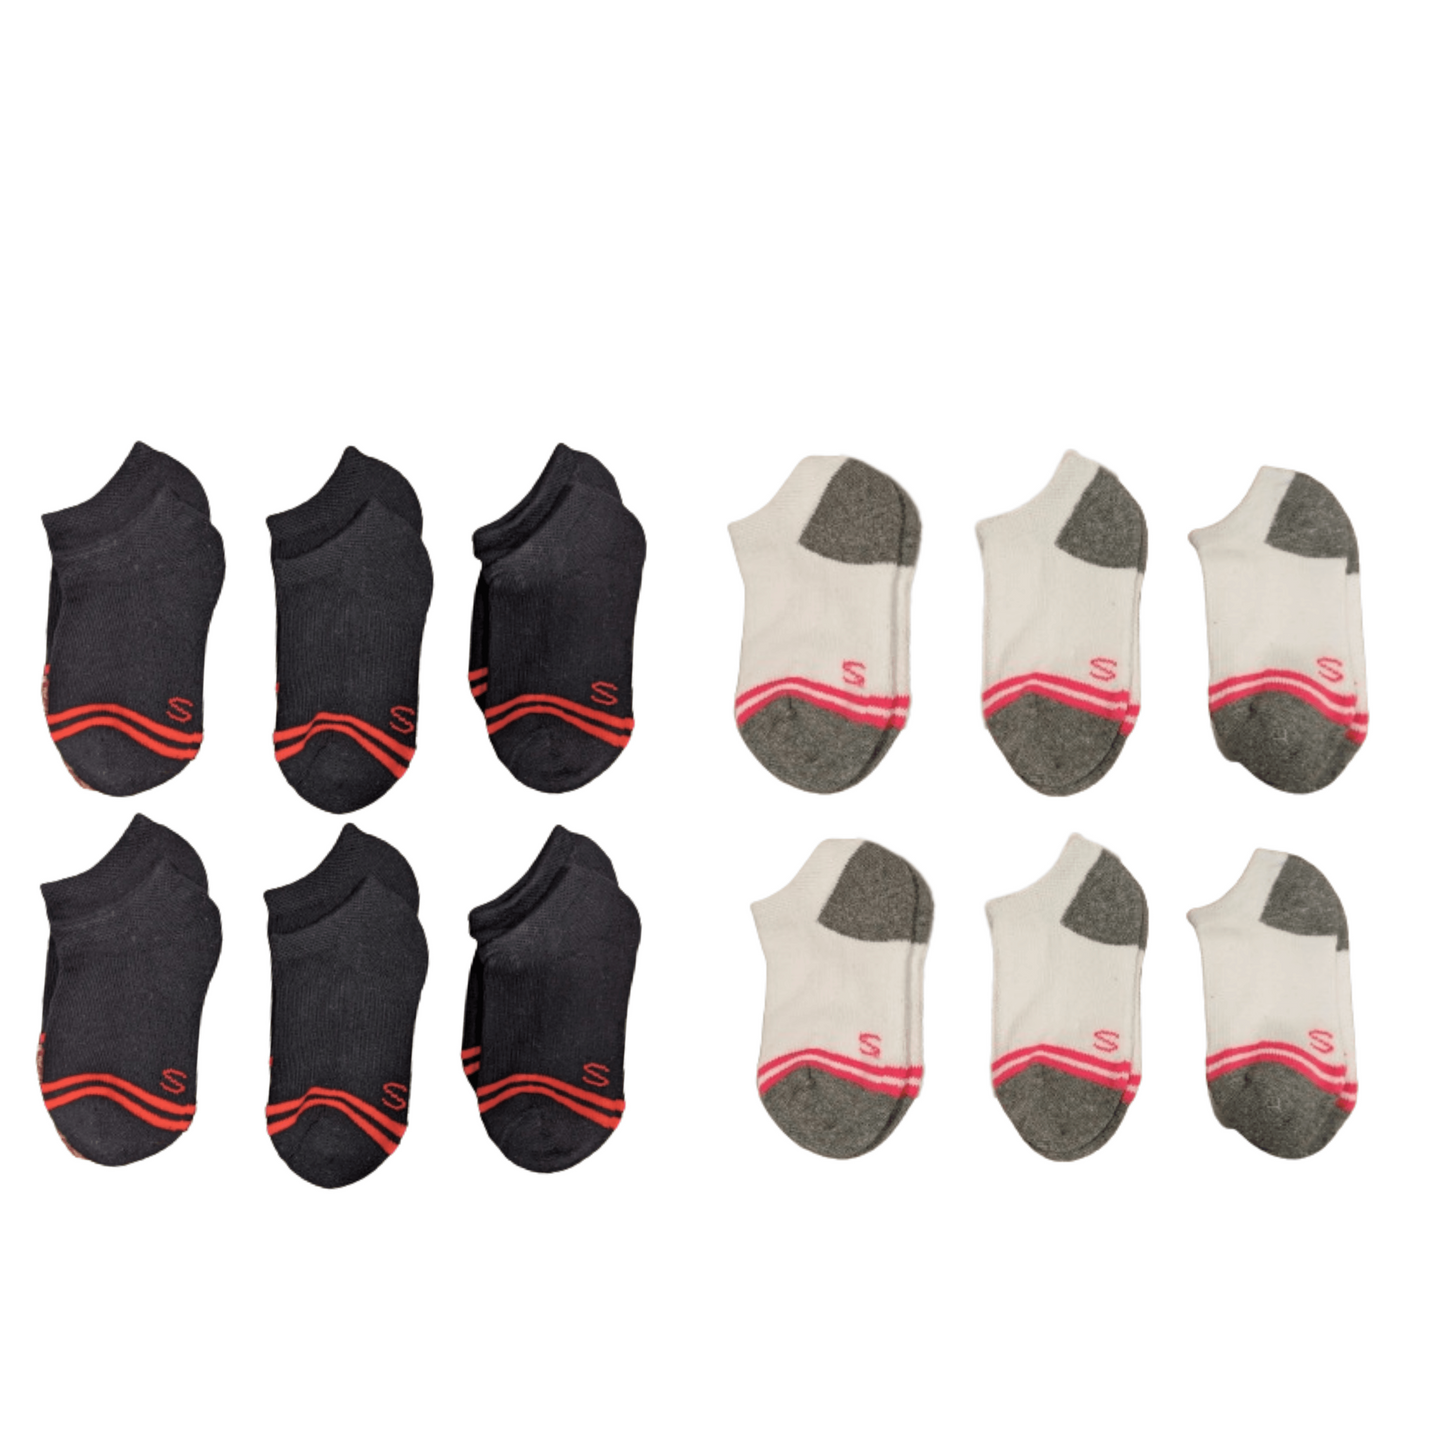  Low Cut Socks for children | Kids socks size 2-4